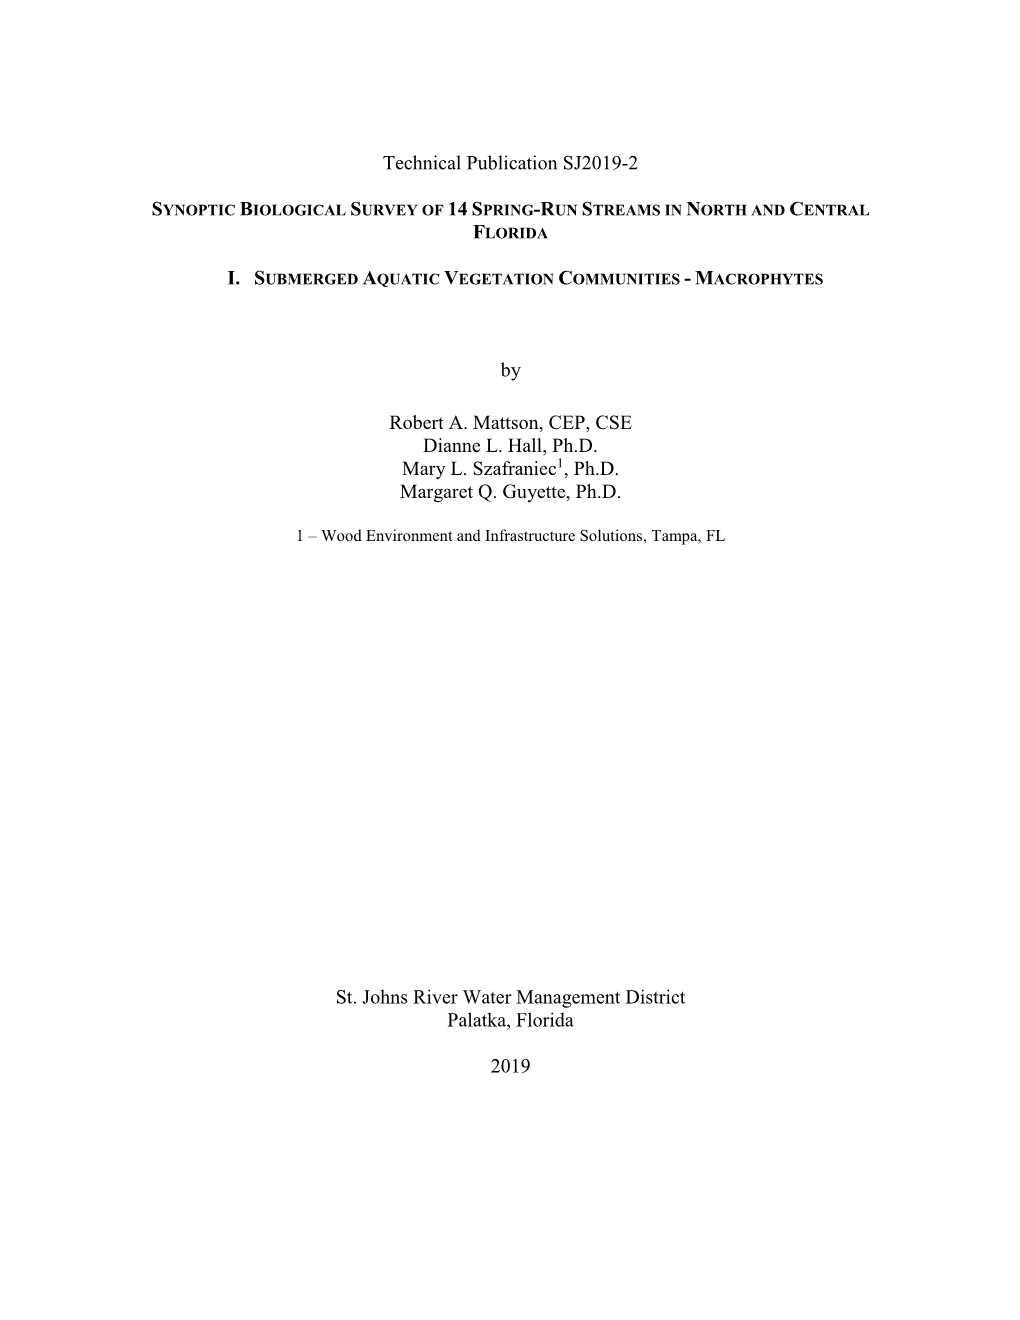 Technical Publication SJ2019-2 by Robert A. Mattson, CEP, CSE Dianne L. Hall, Ph.D. Mary L. Szafraniec1, Ph.D. Margaret Q. Guyet